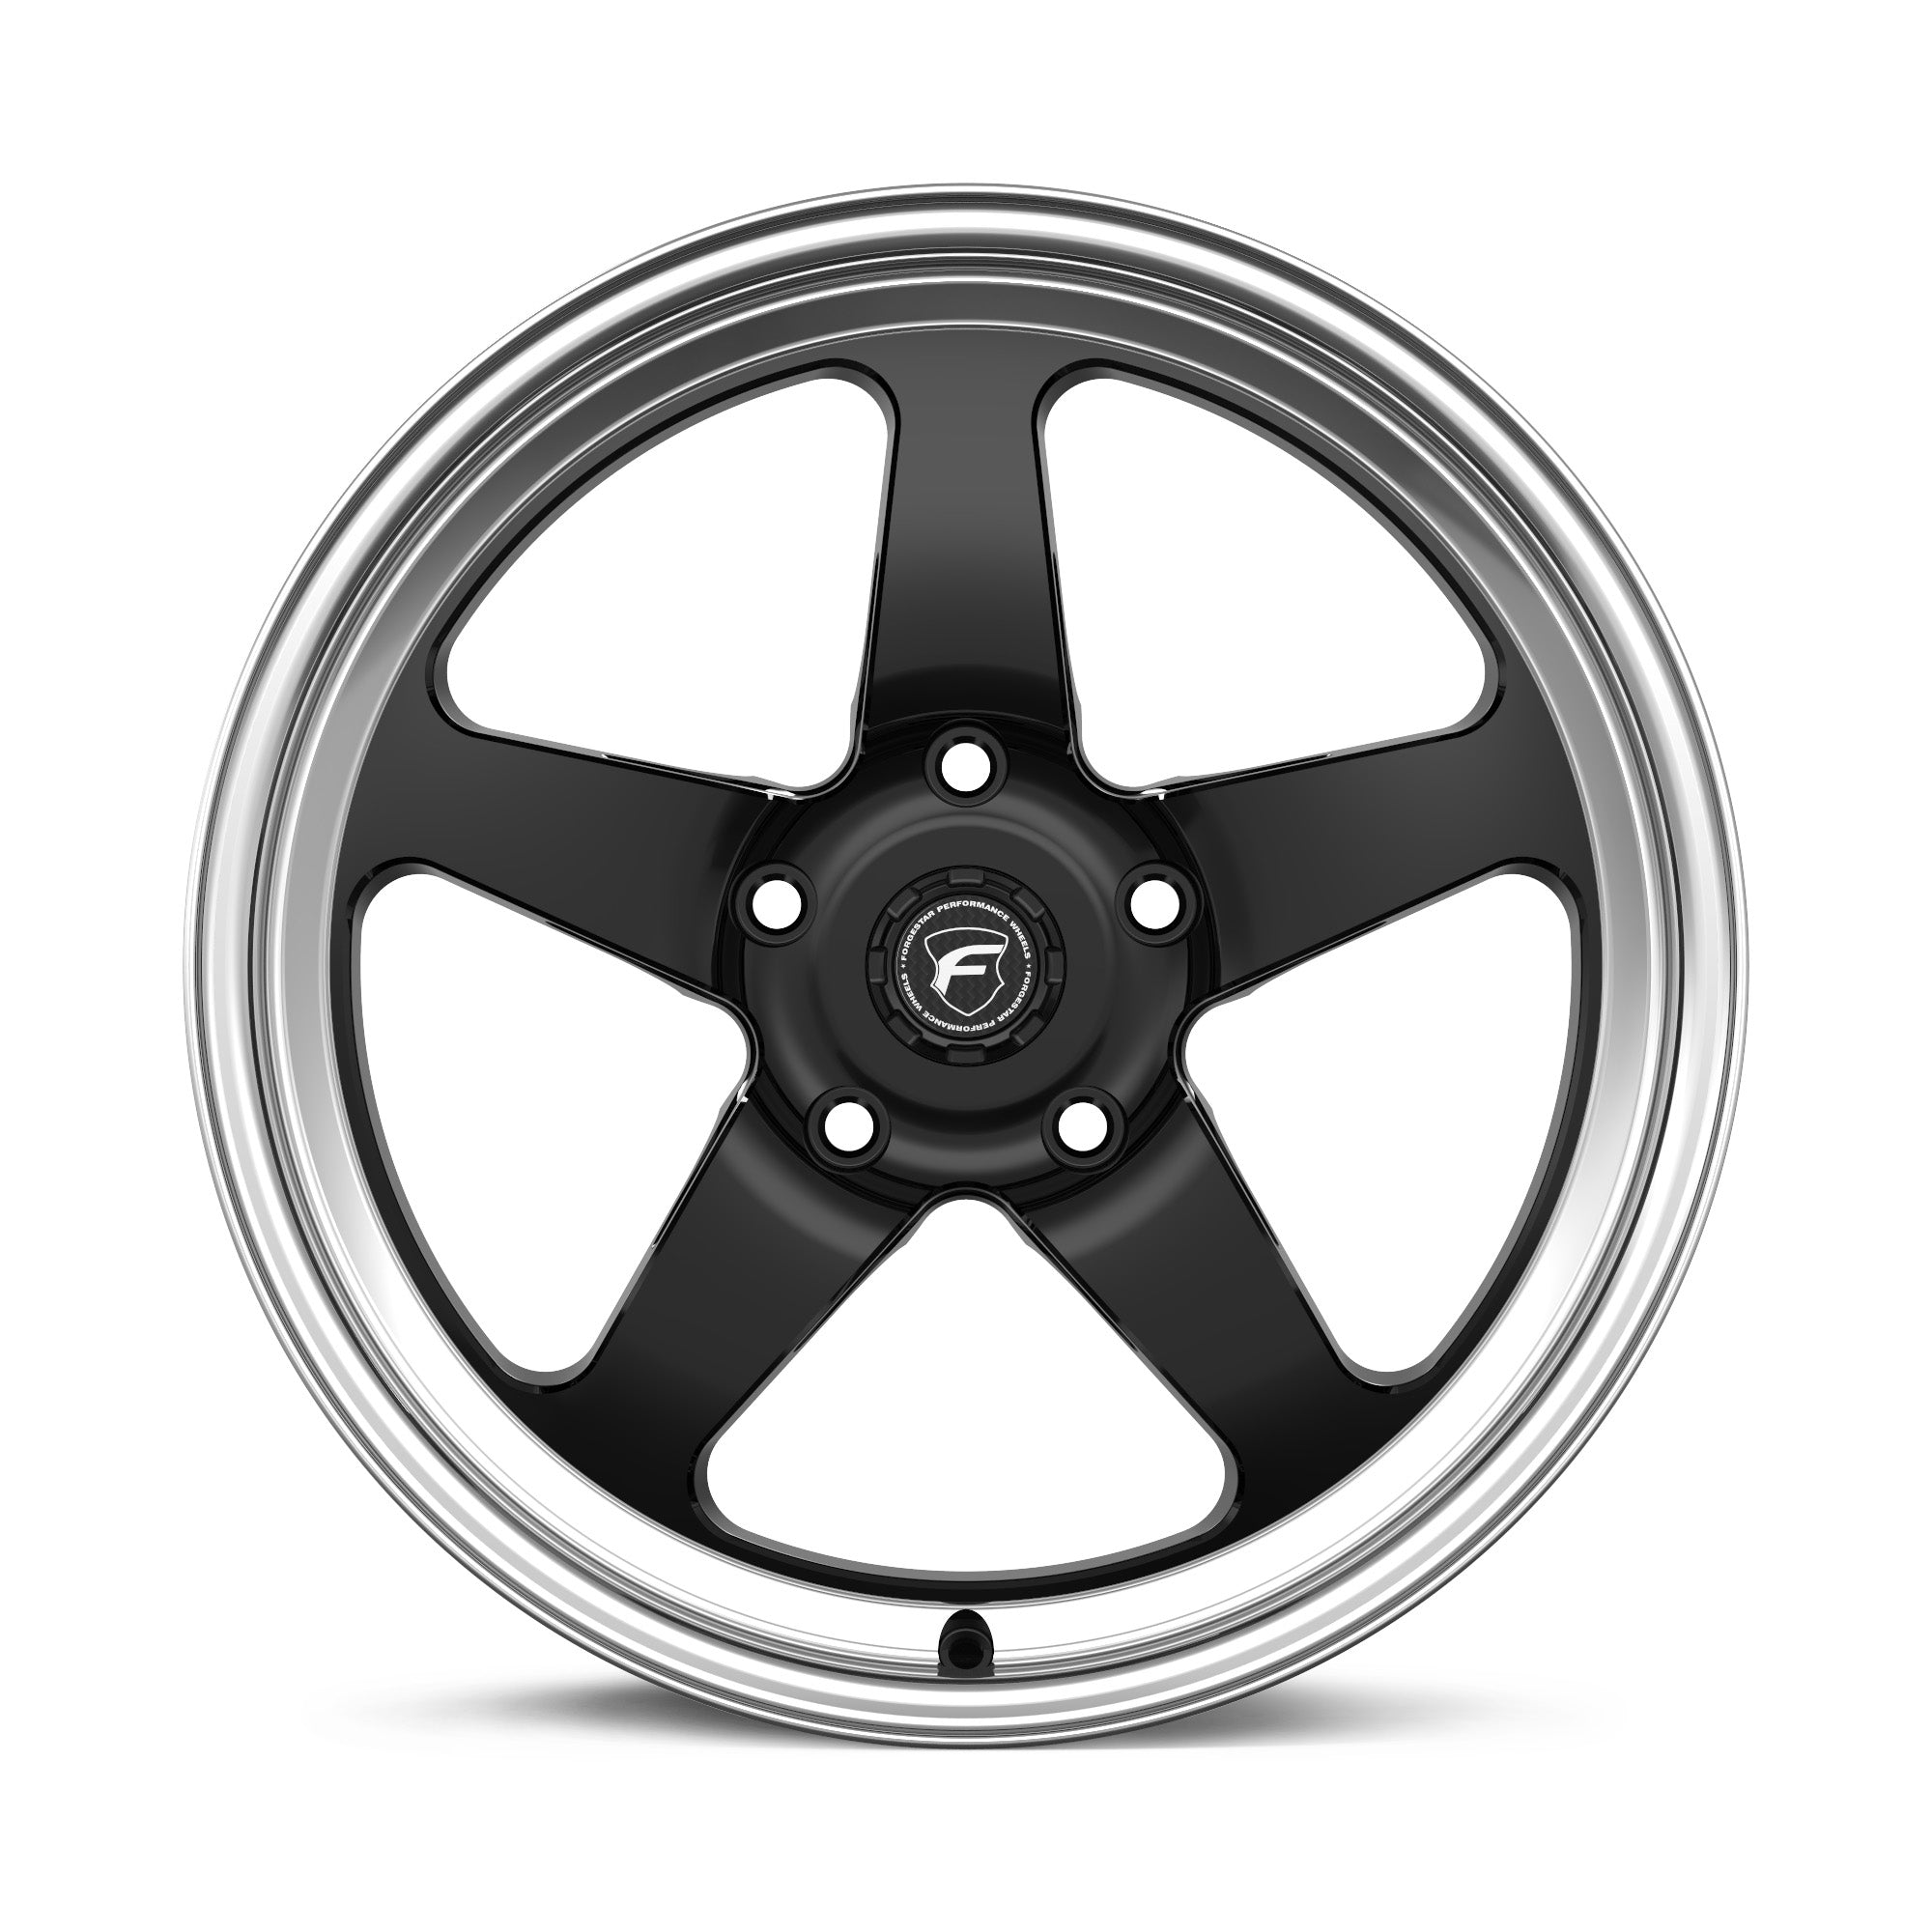 Forgestar D5 Drag Racing Wheels - Gloss Black w/Machined Lip - 18x5 - Sold Individually - Motorsports LA